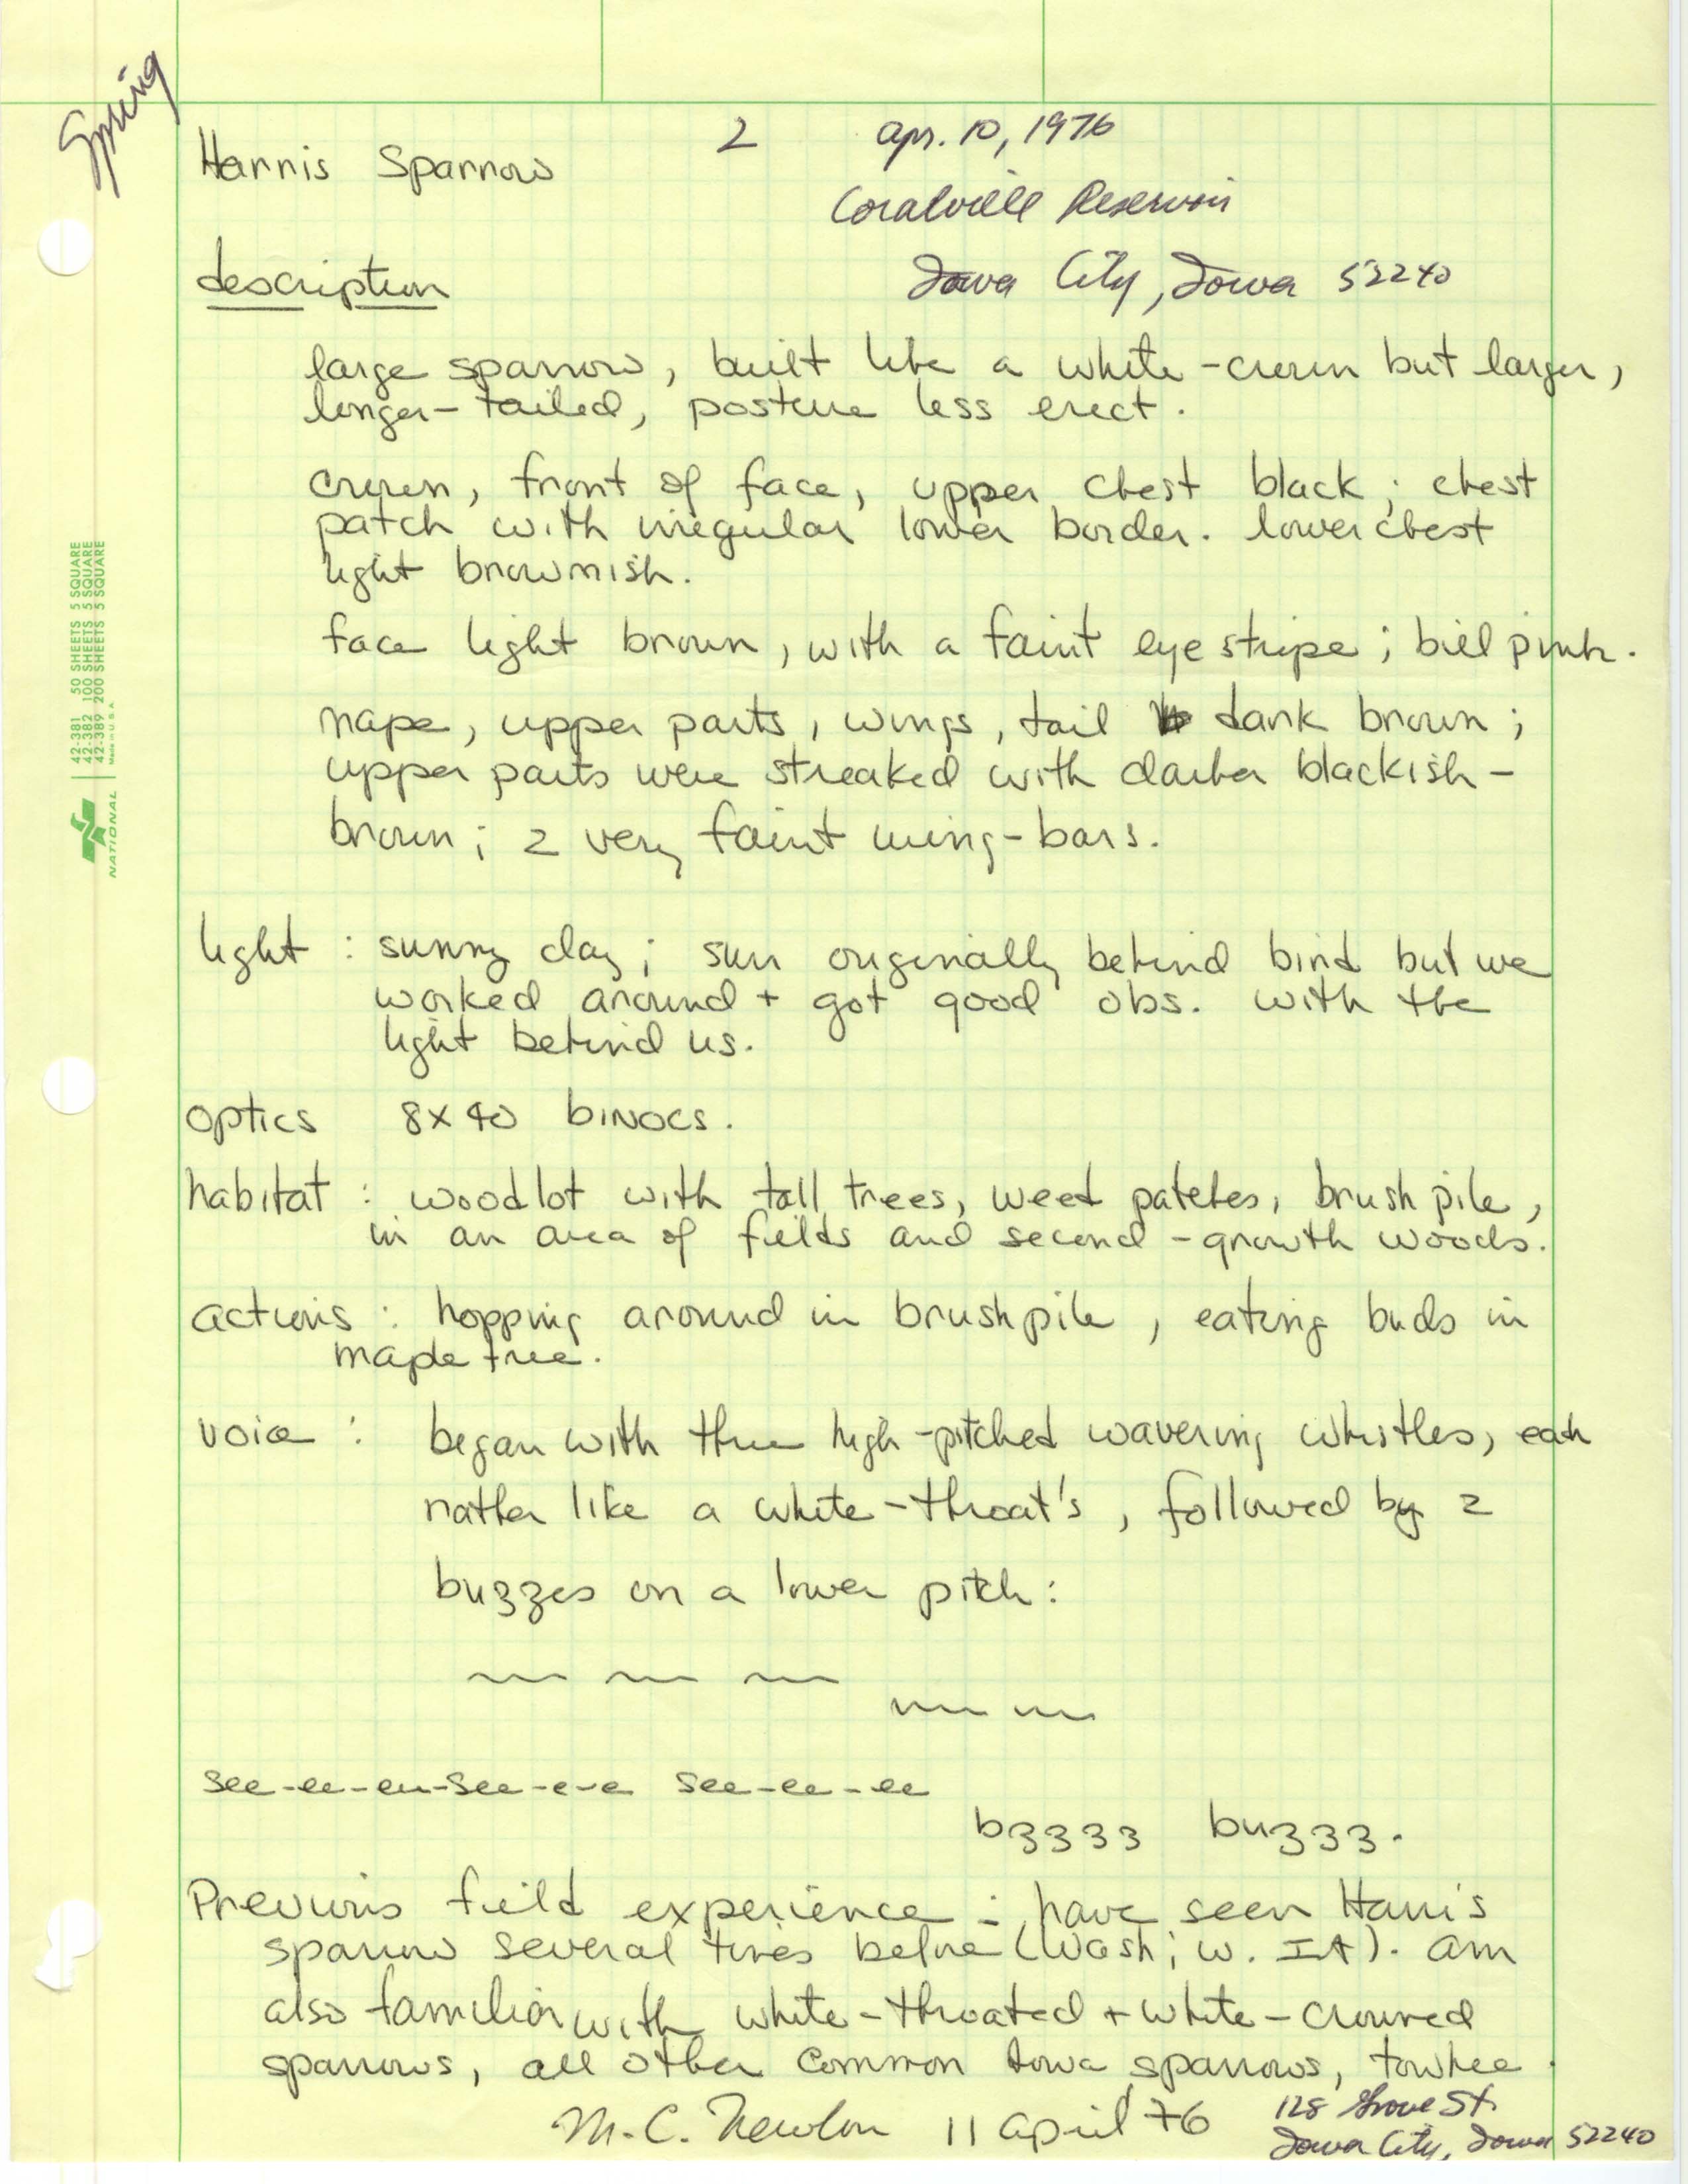 Rare bird documentation form for Harris' Sparrow at Coralville Reservoir, 1976